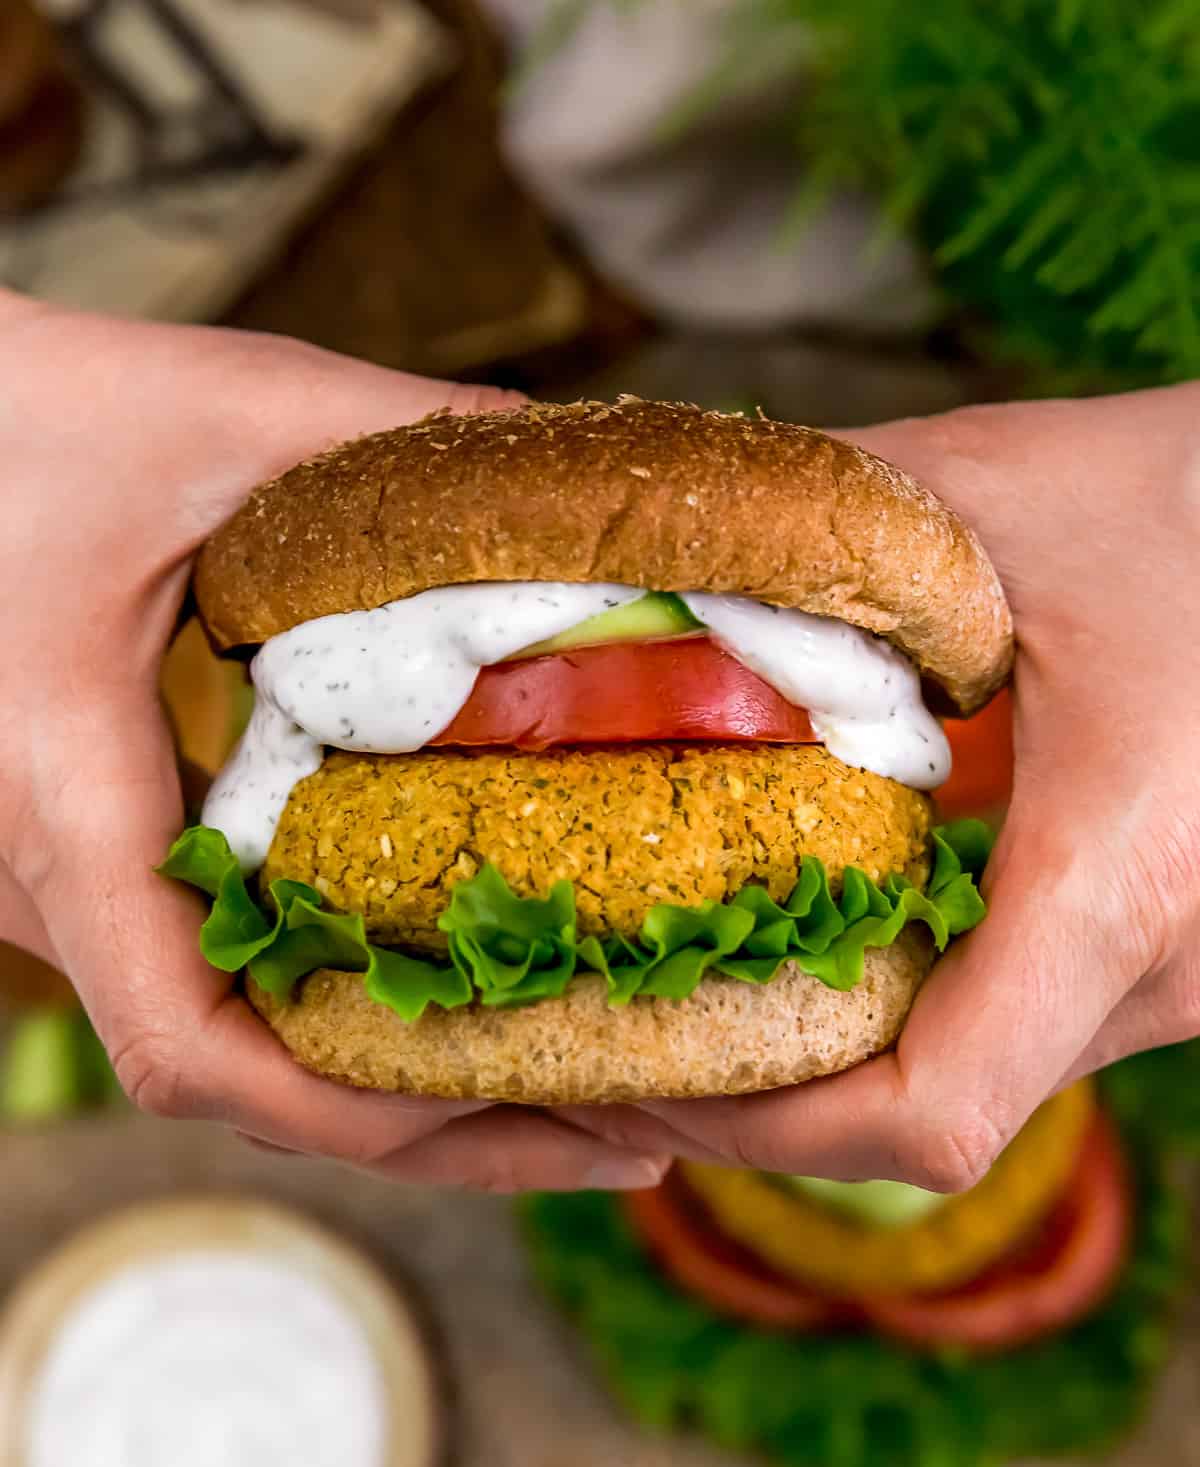 Eating a Vegan “Salmon” Burger